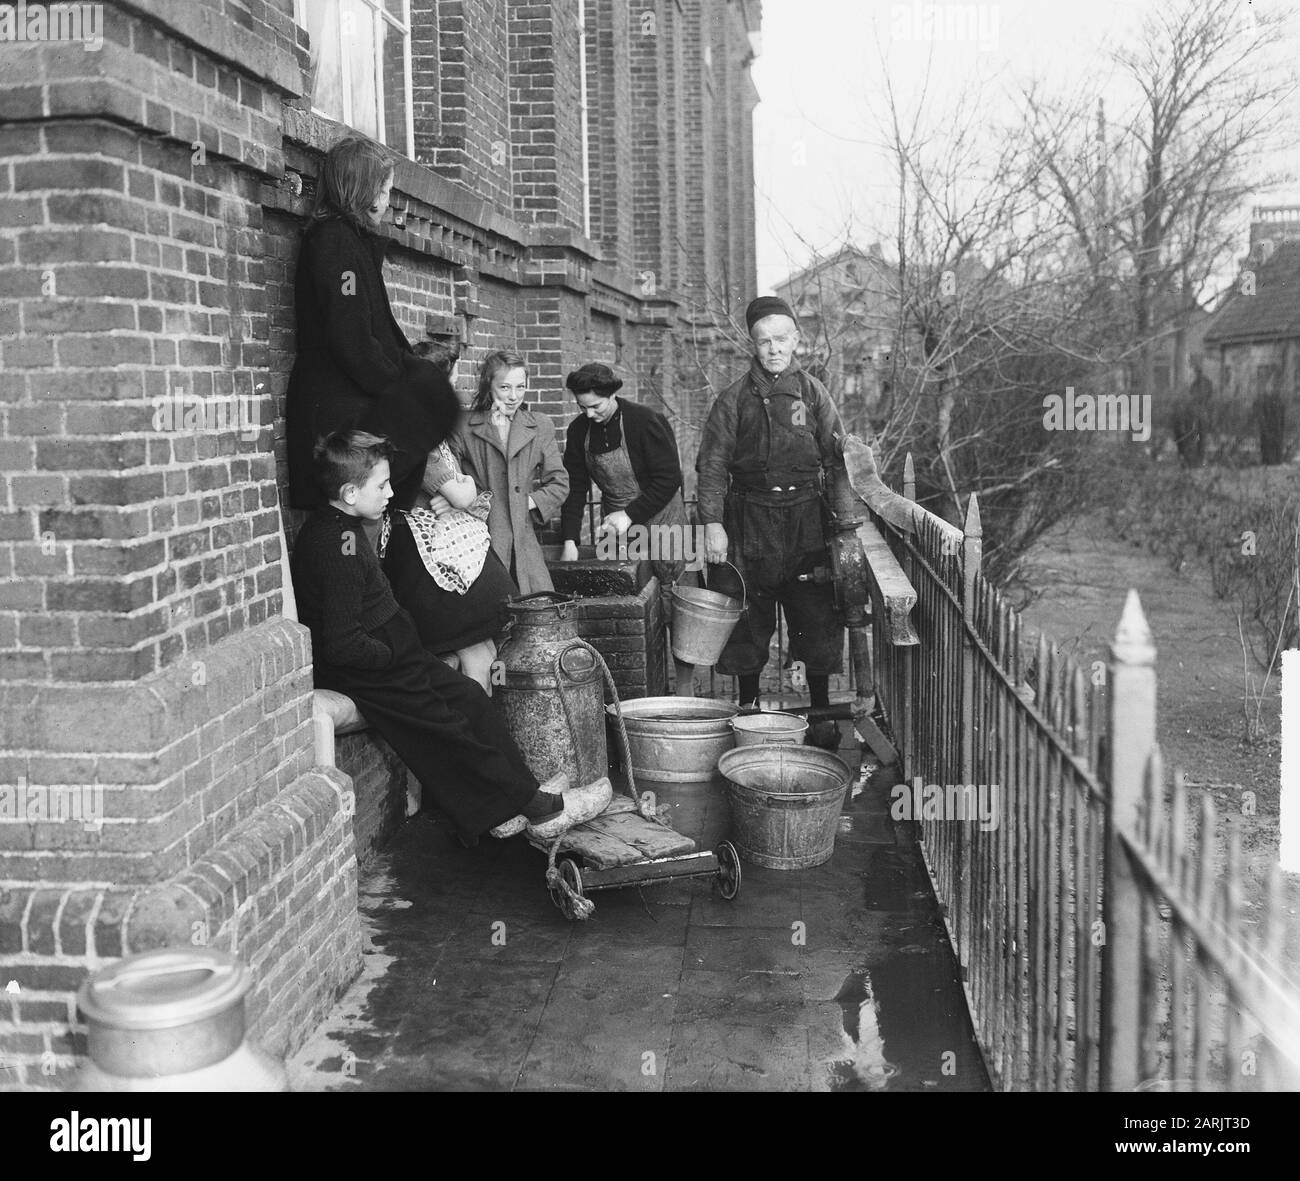 Water scarcity on Urk Date: December 3, 1948 Location: Flevoland, Urk Stock Photo